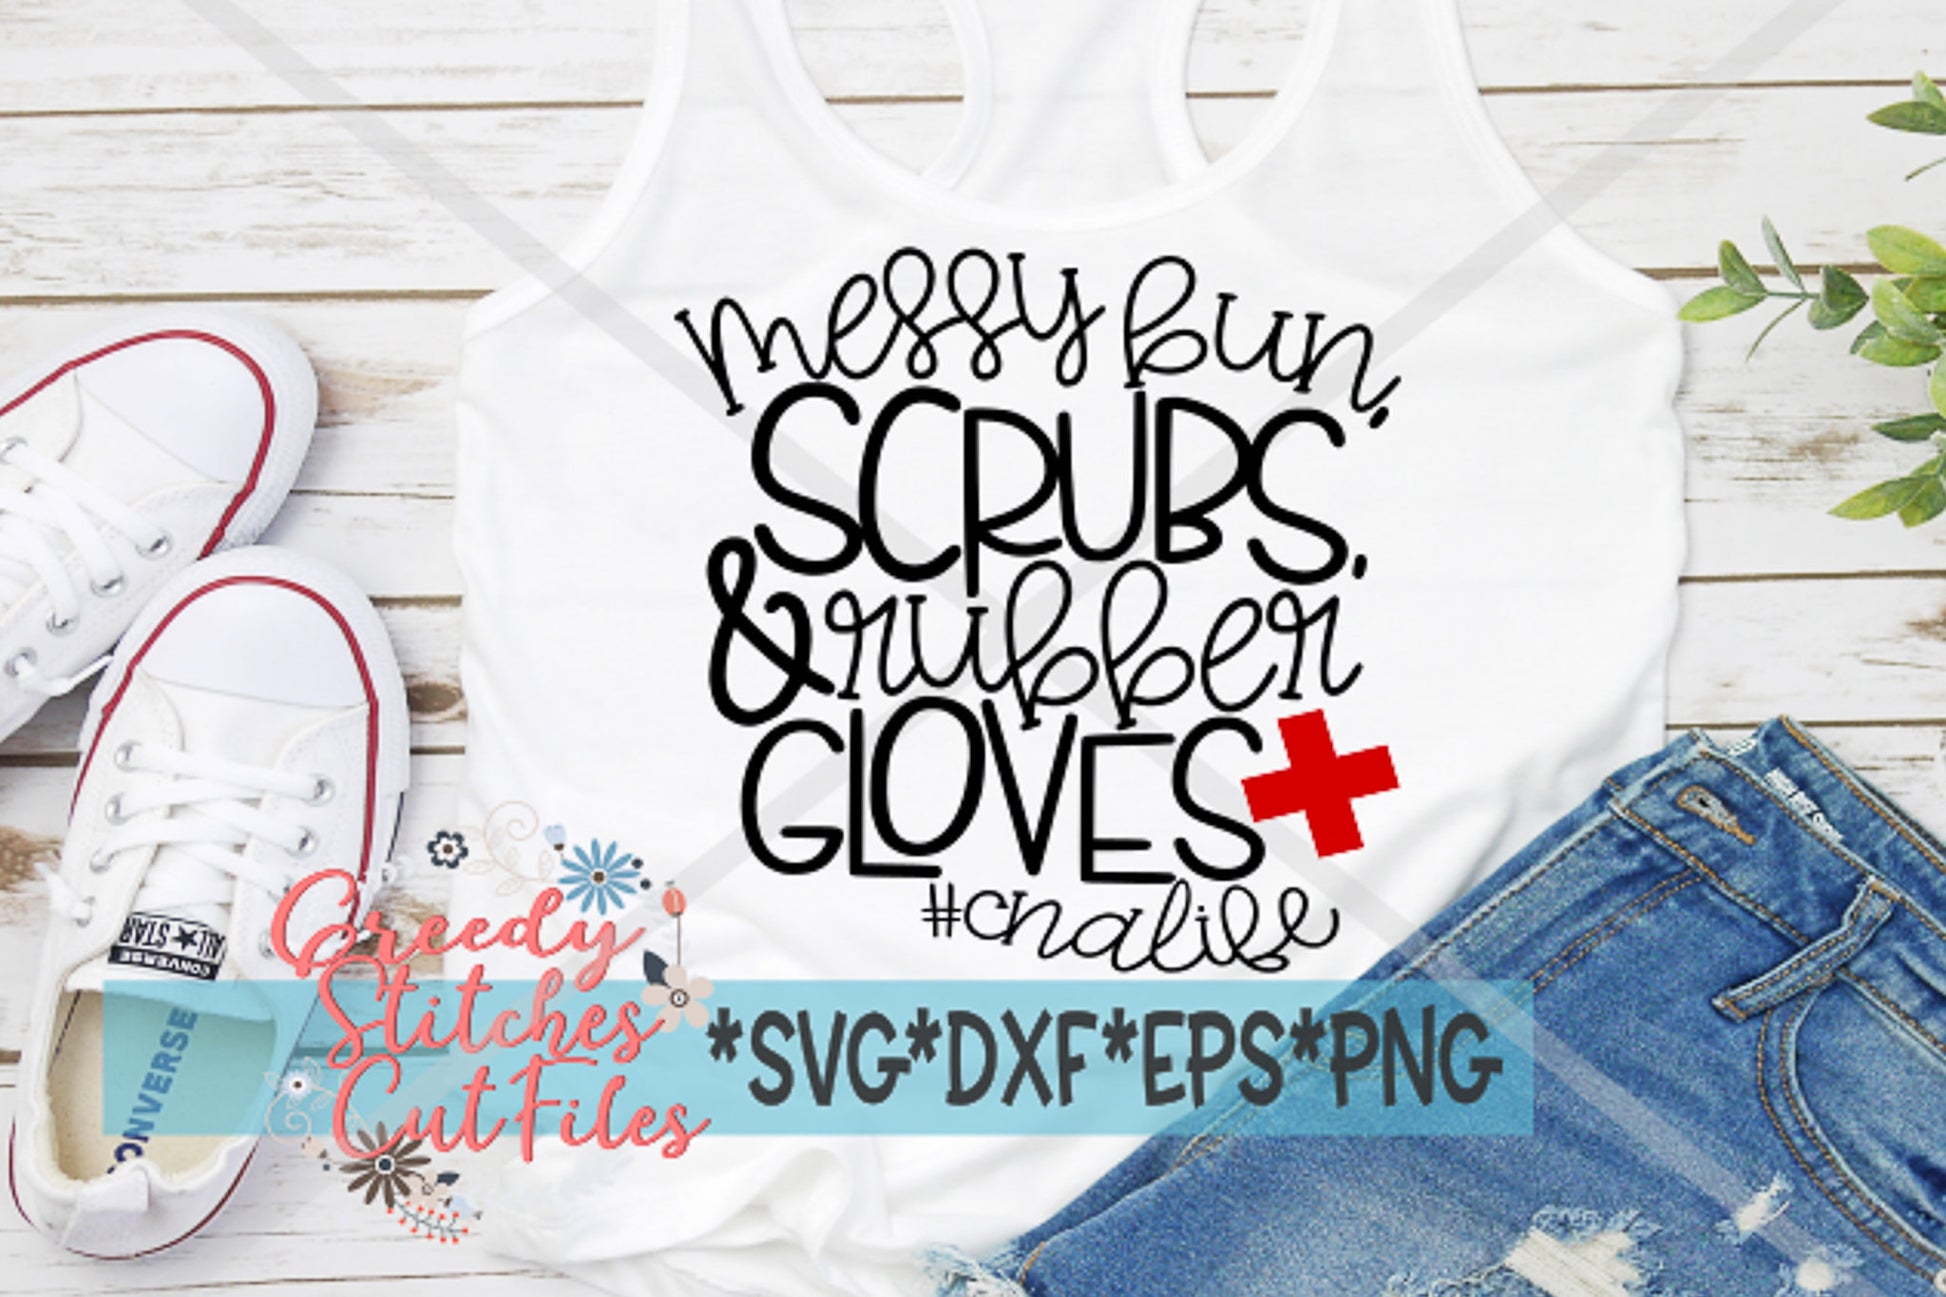 CNA Nurse SVG | Messy Bun, Scrubs, & Rubber Gloves svg dxf eps png | CNA Life SvG | Messy Bun SvG | Nurse SvG | Instant Download Cut File